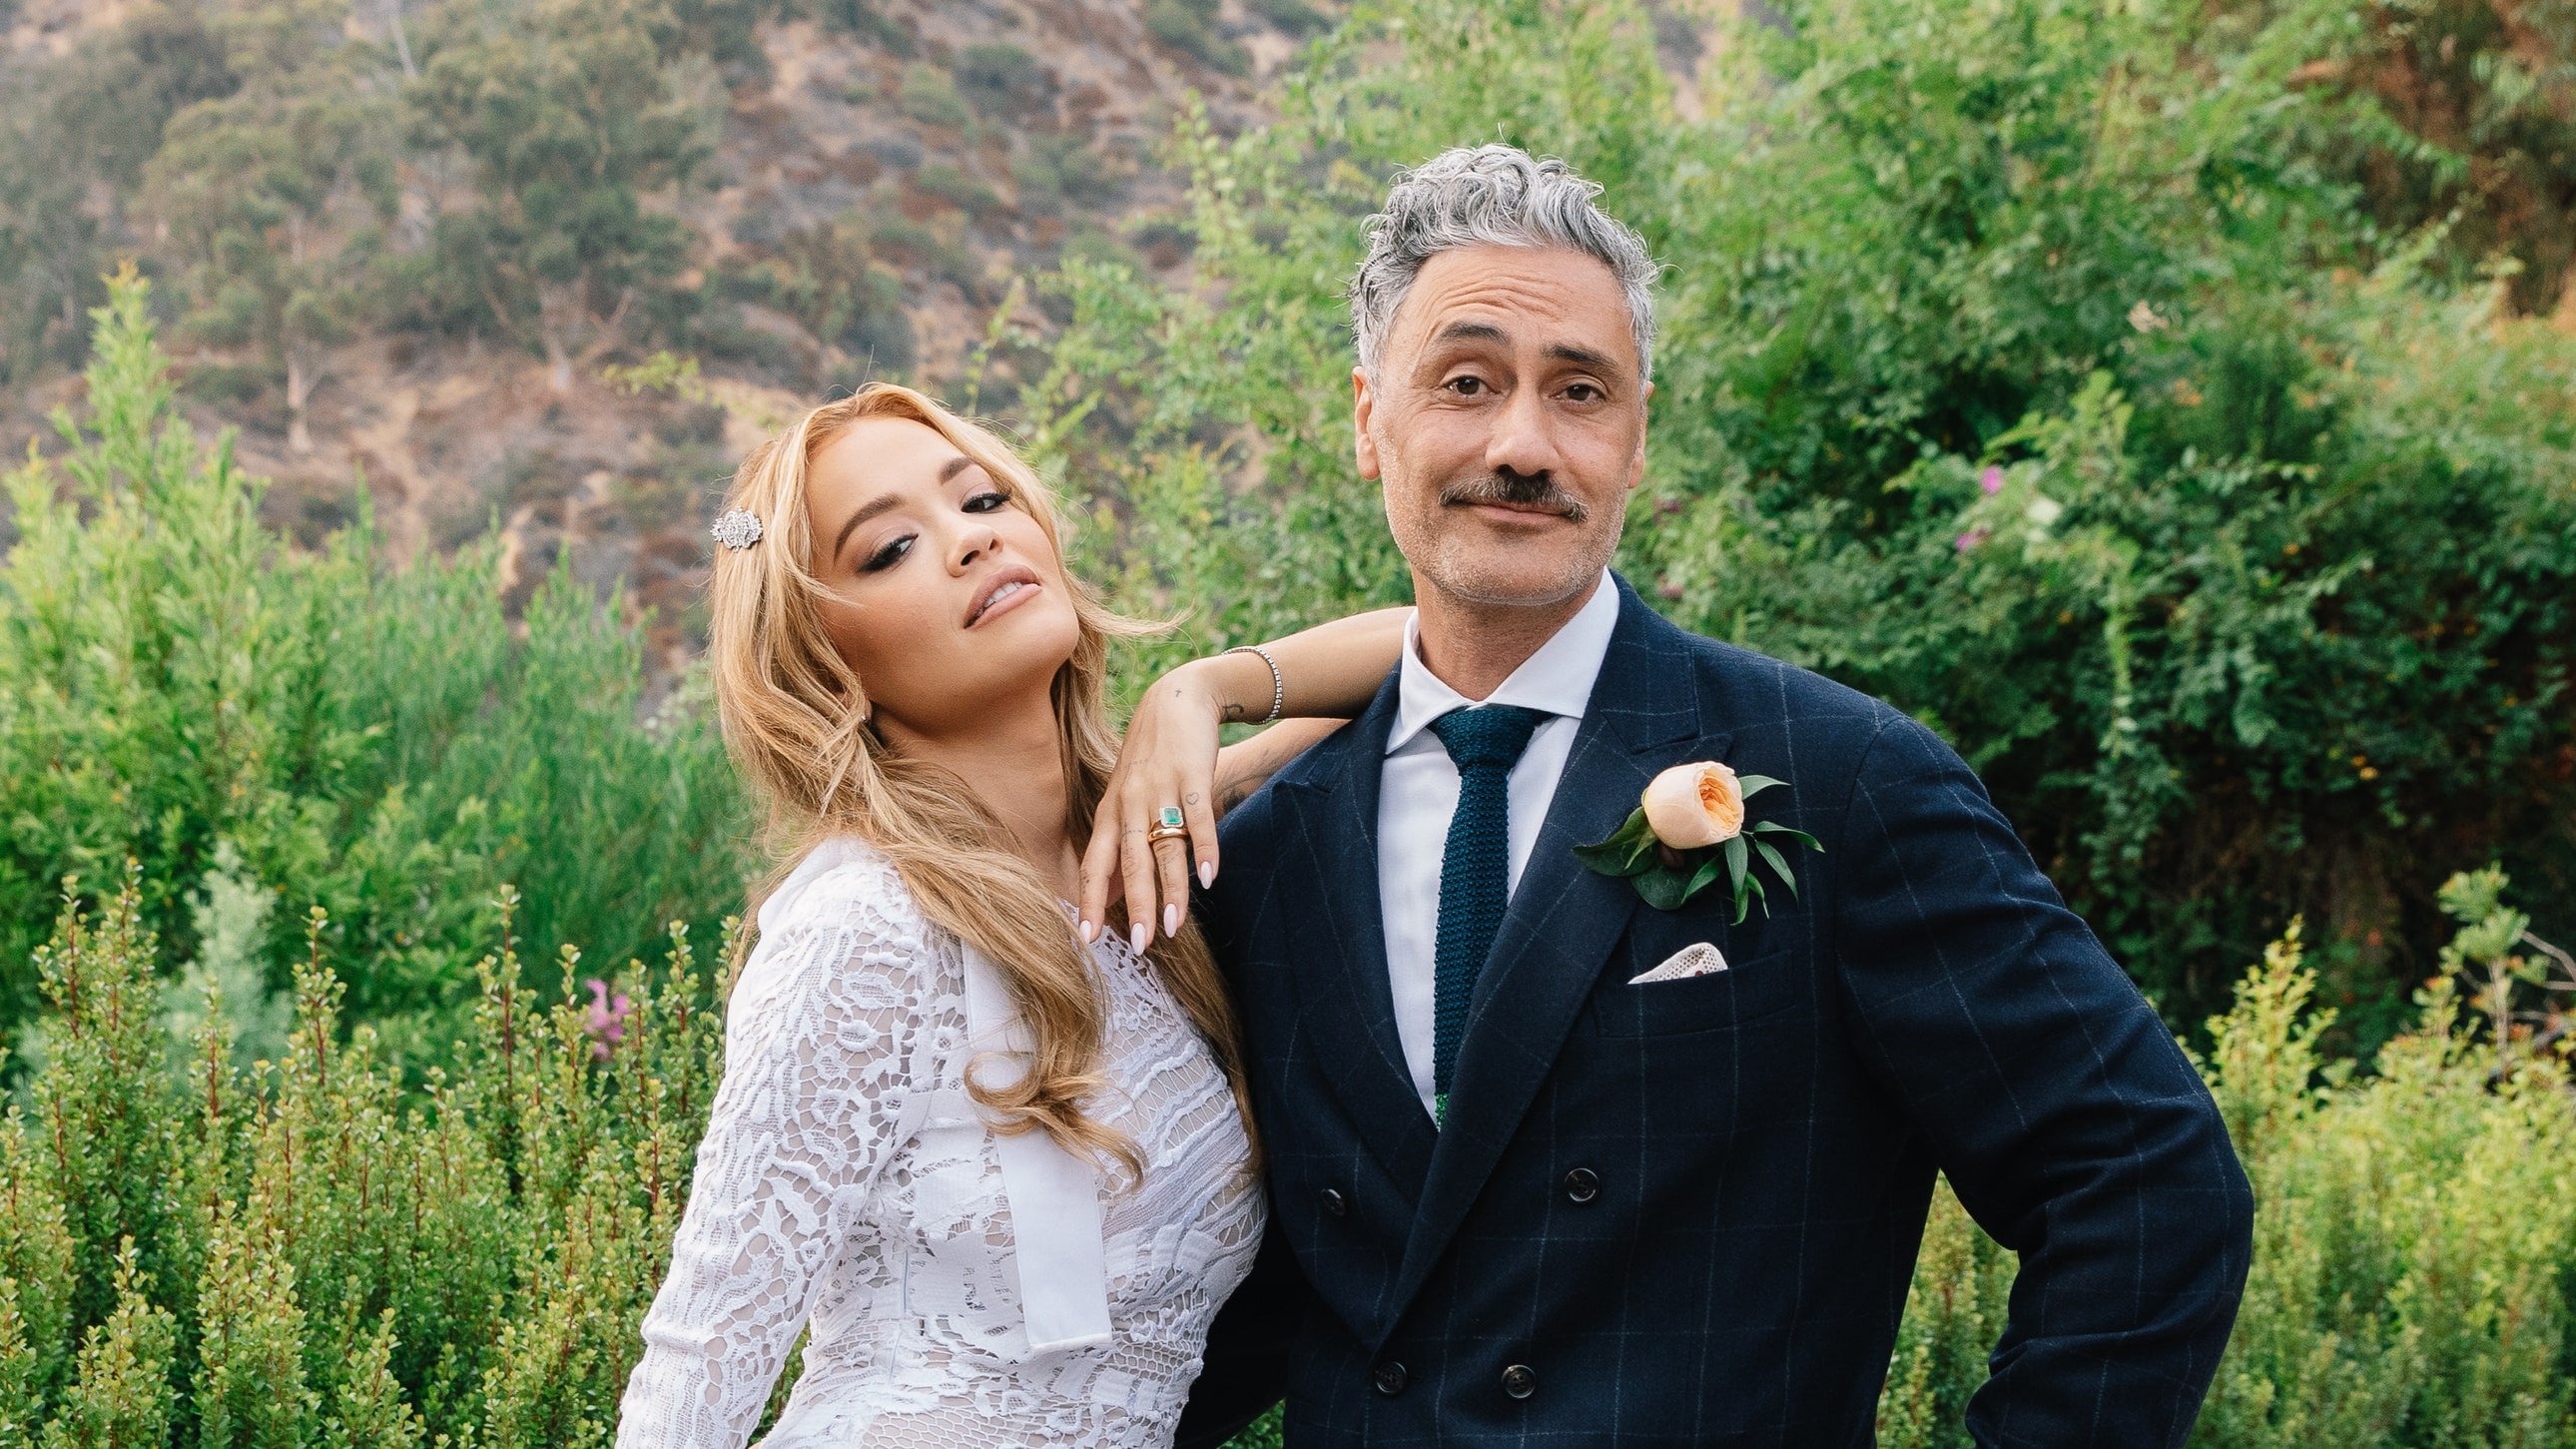 First look at Taika’s and Rita Ora’s wedding: Inside Rita Ora And Taika ...